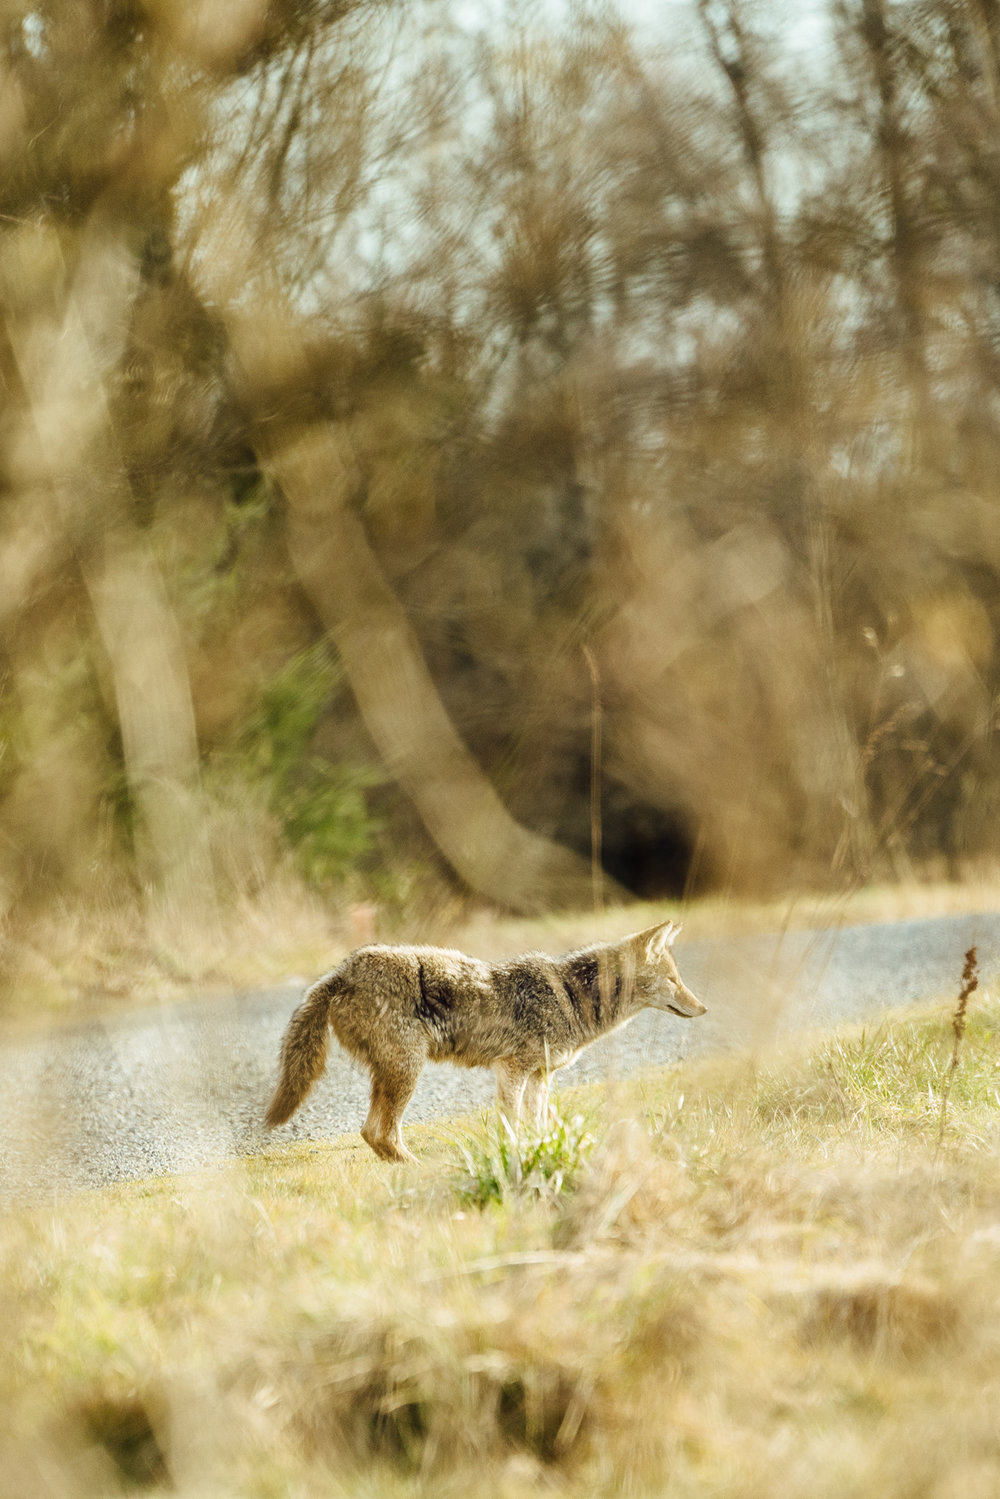 Photograph of a wild coyote hunting near Olympia, Washington